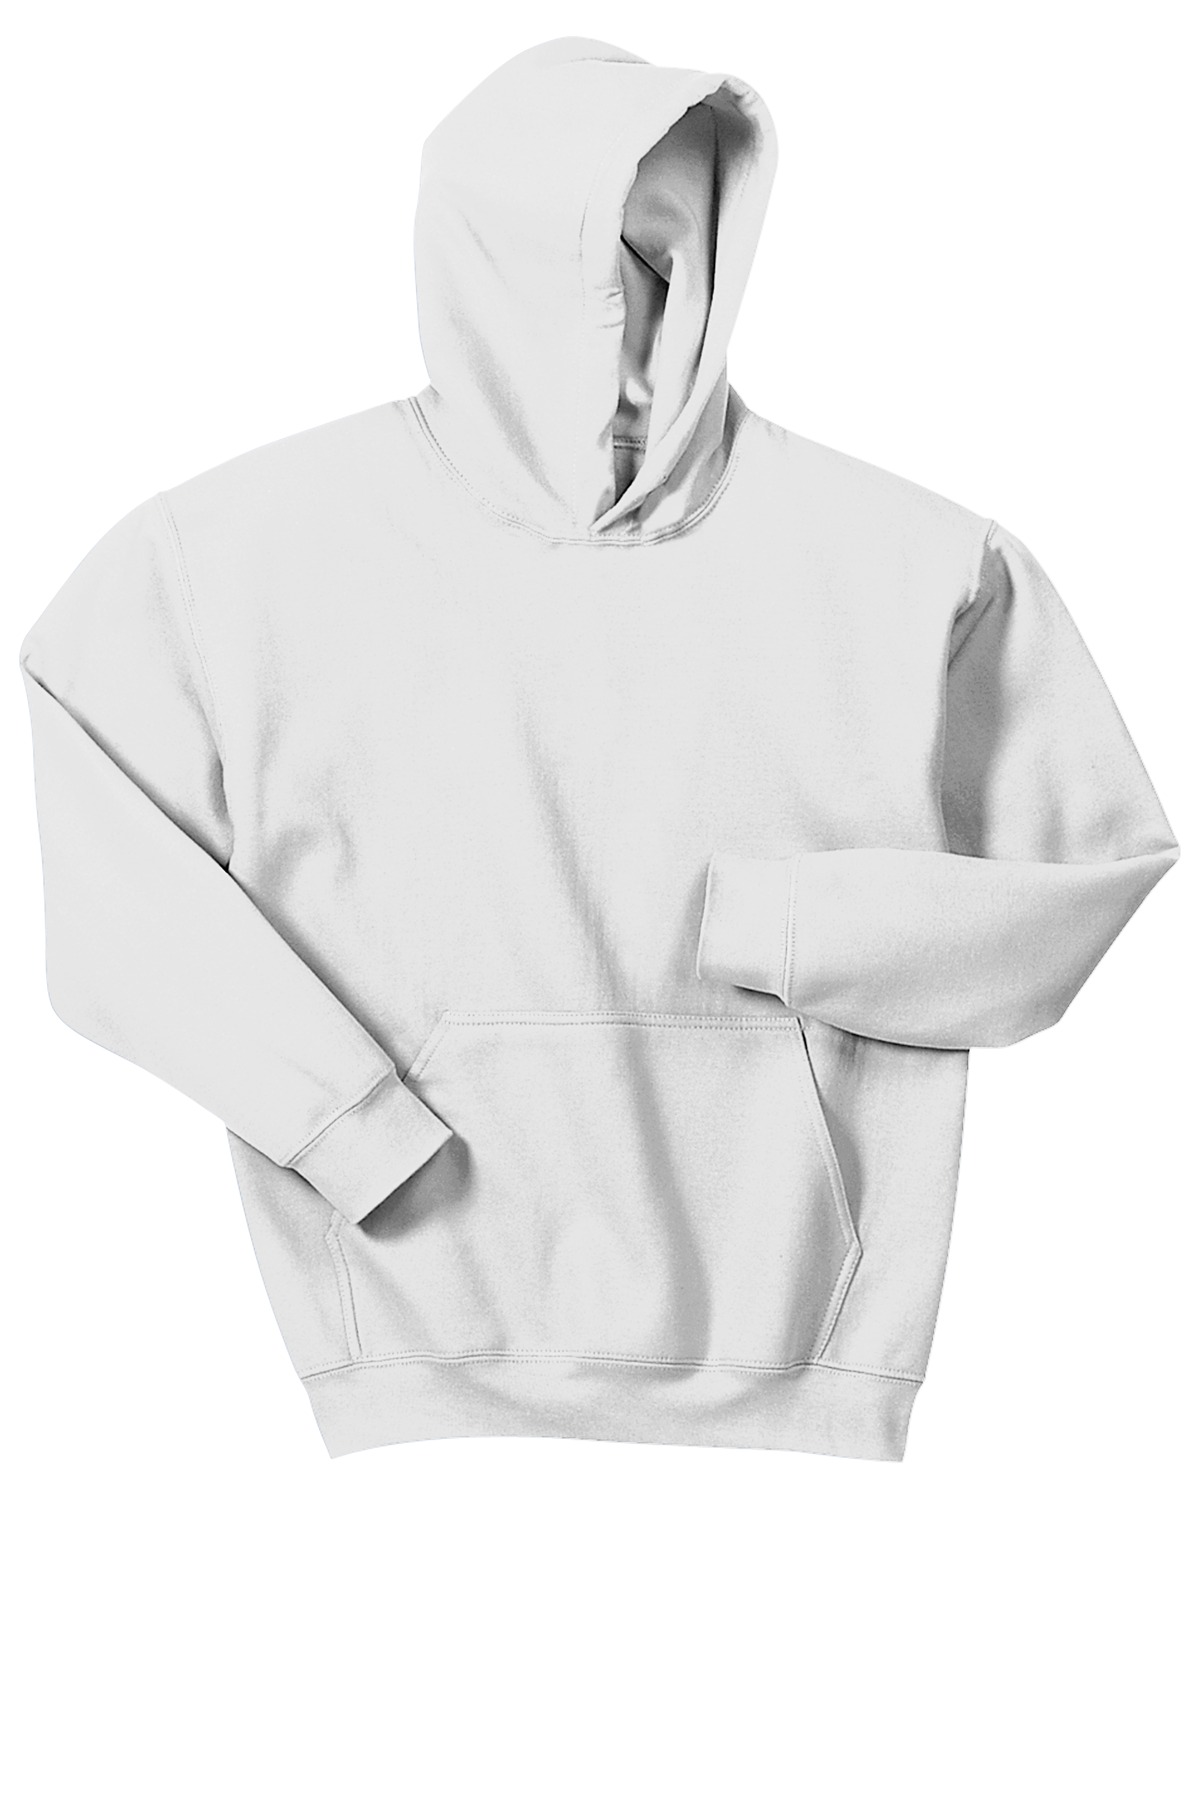 Buy Gildan - Youth Heavy Blend Hooded Sweatshirt - Gildan Online at ...